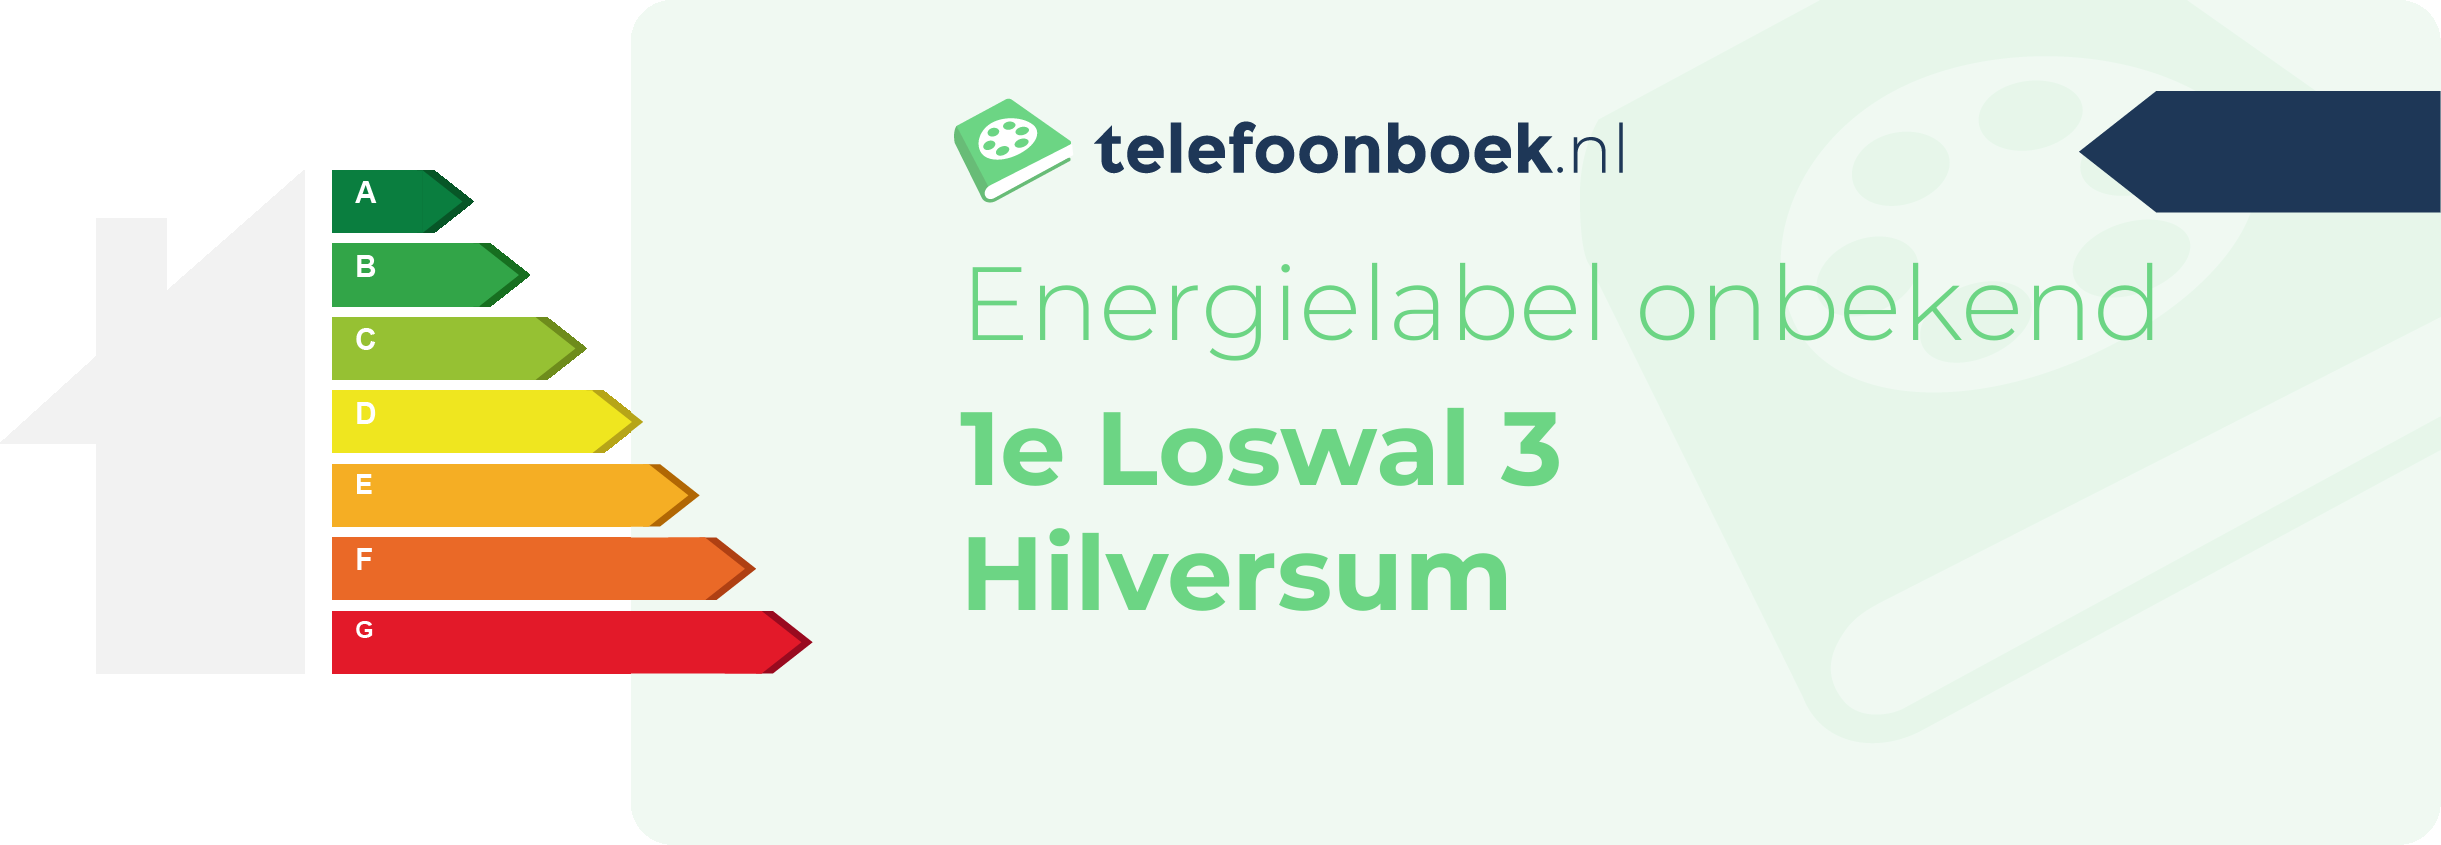 Energielabel 1e Loswal 3 Hilversum